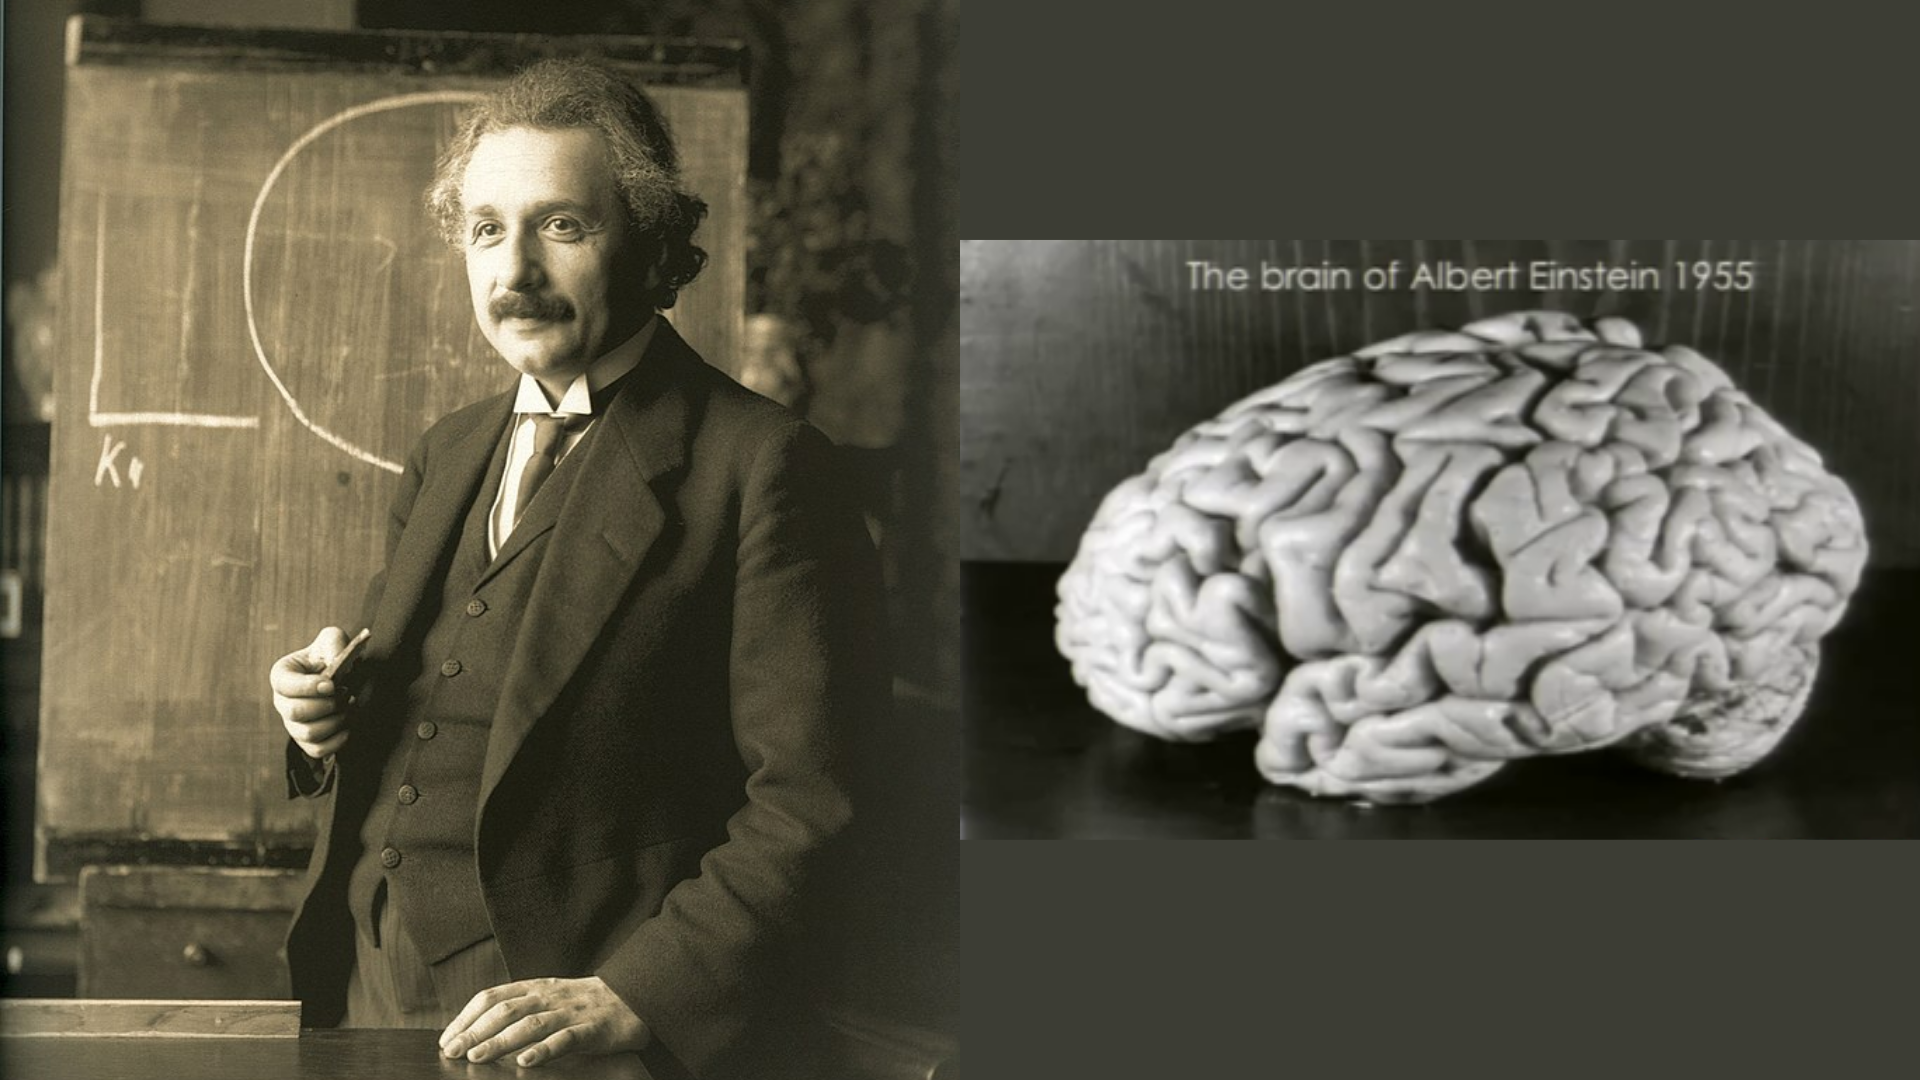 Эйнштейн и его мозг. Фото © Wikimedia Commons / bhm.ch, T. Harvey